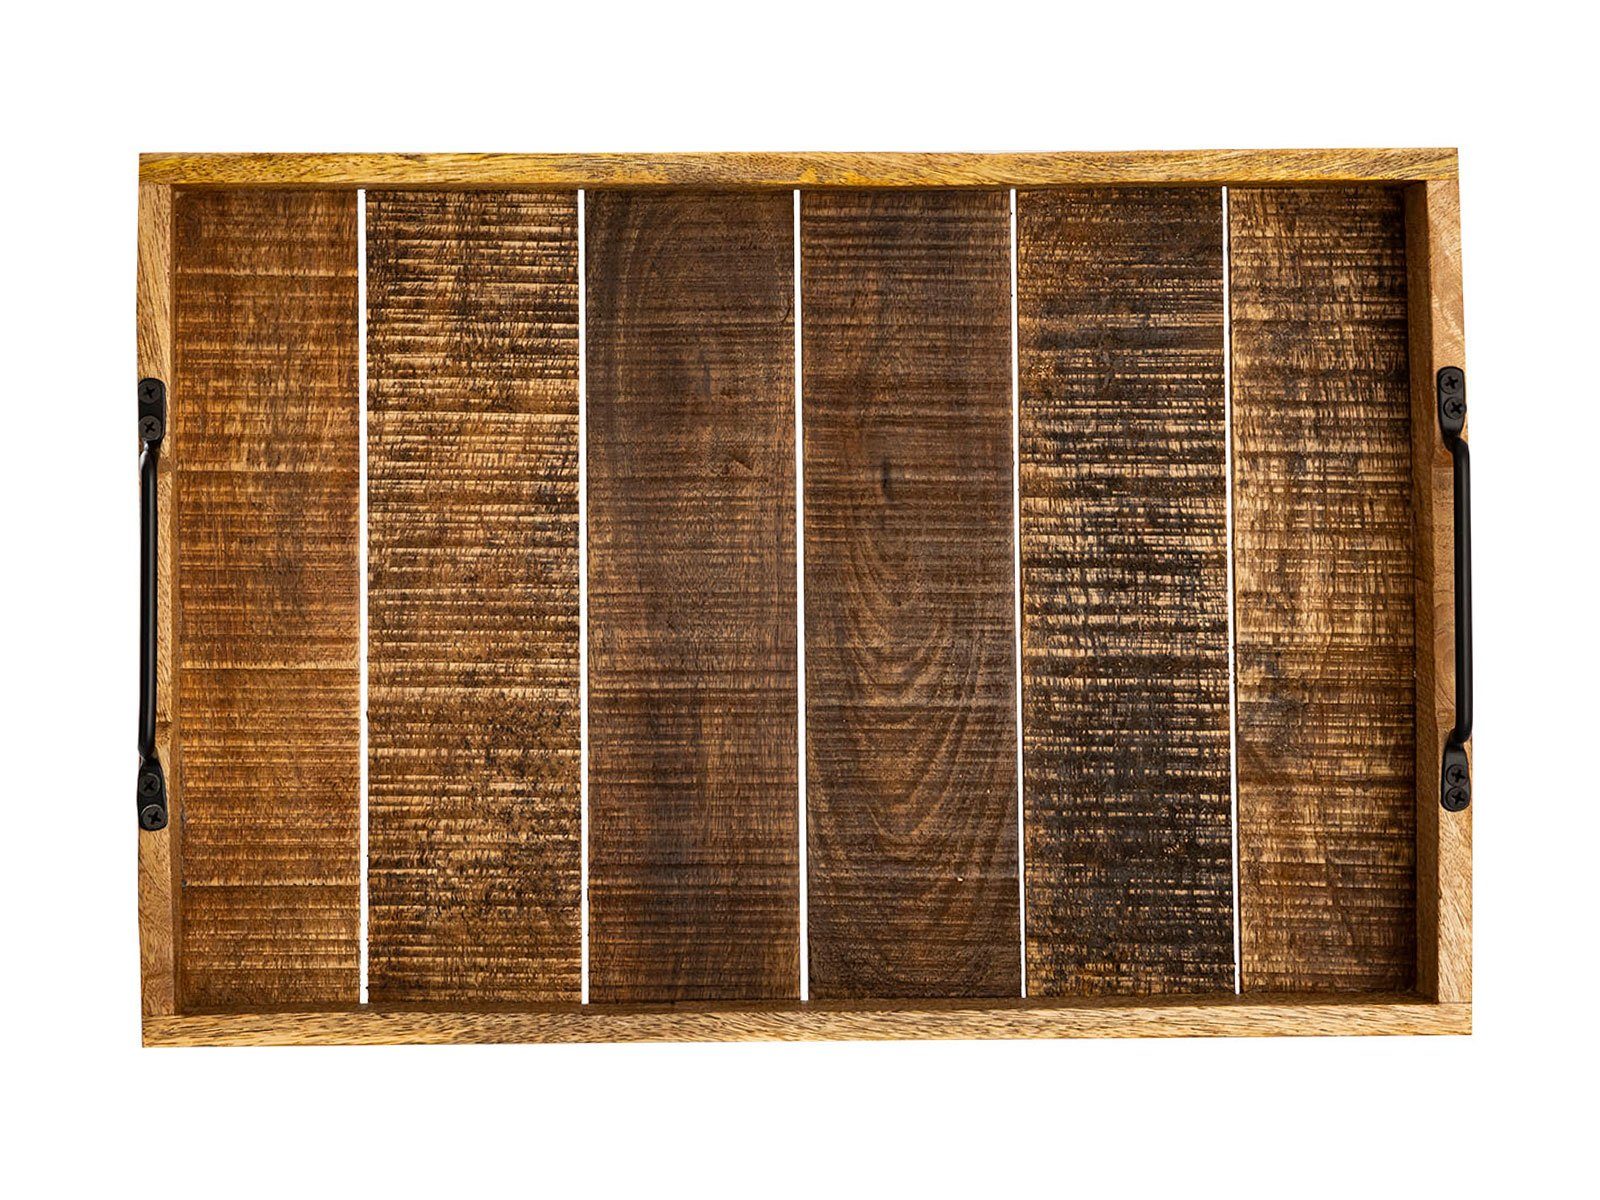 Dekotablett Serviertab Casamia 2 Set Stück Serviertablett Holztablett Holz Tablett 46x31cm